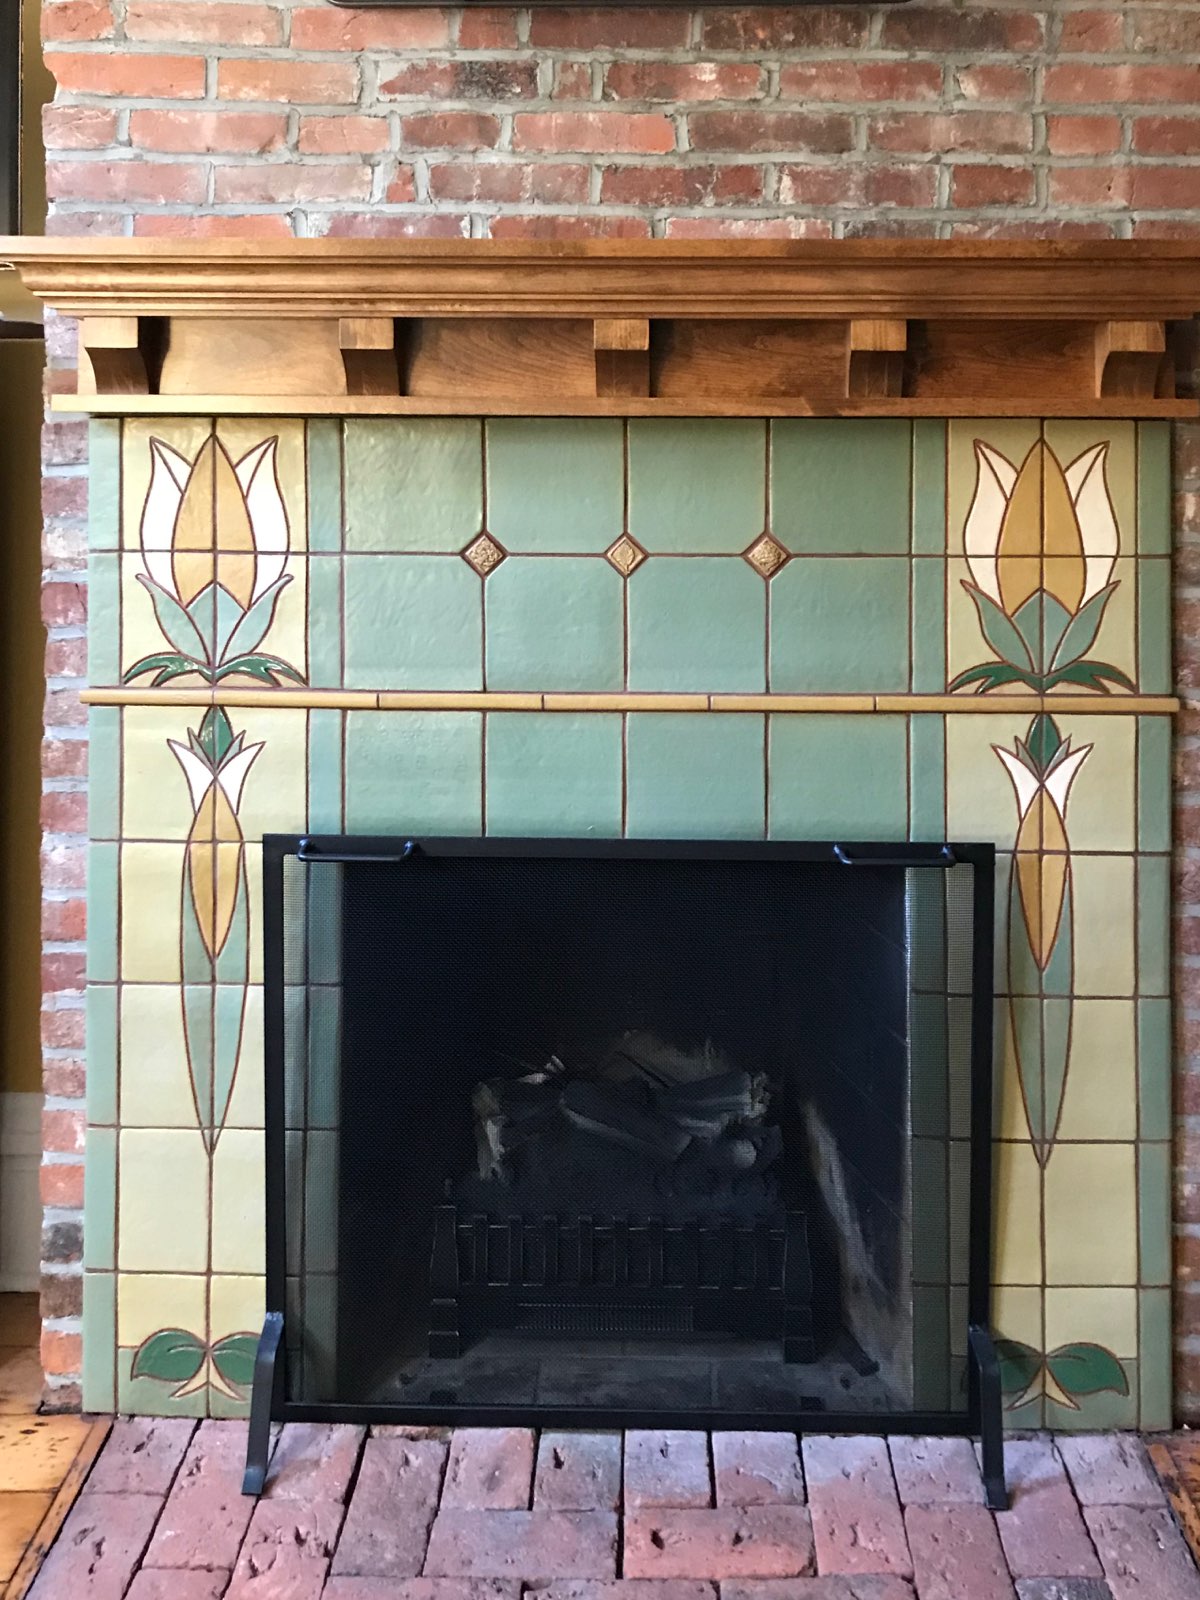 Victorian Fireplace Mantel - Vintage Craftsman